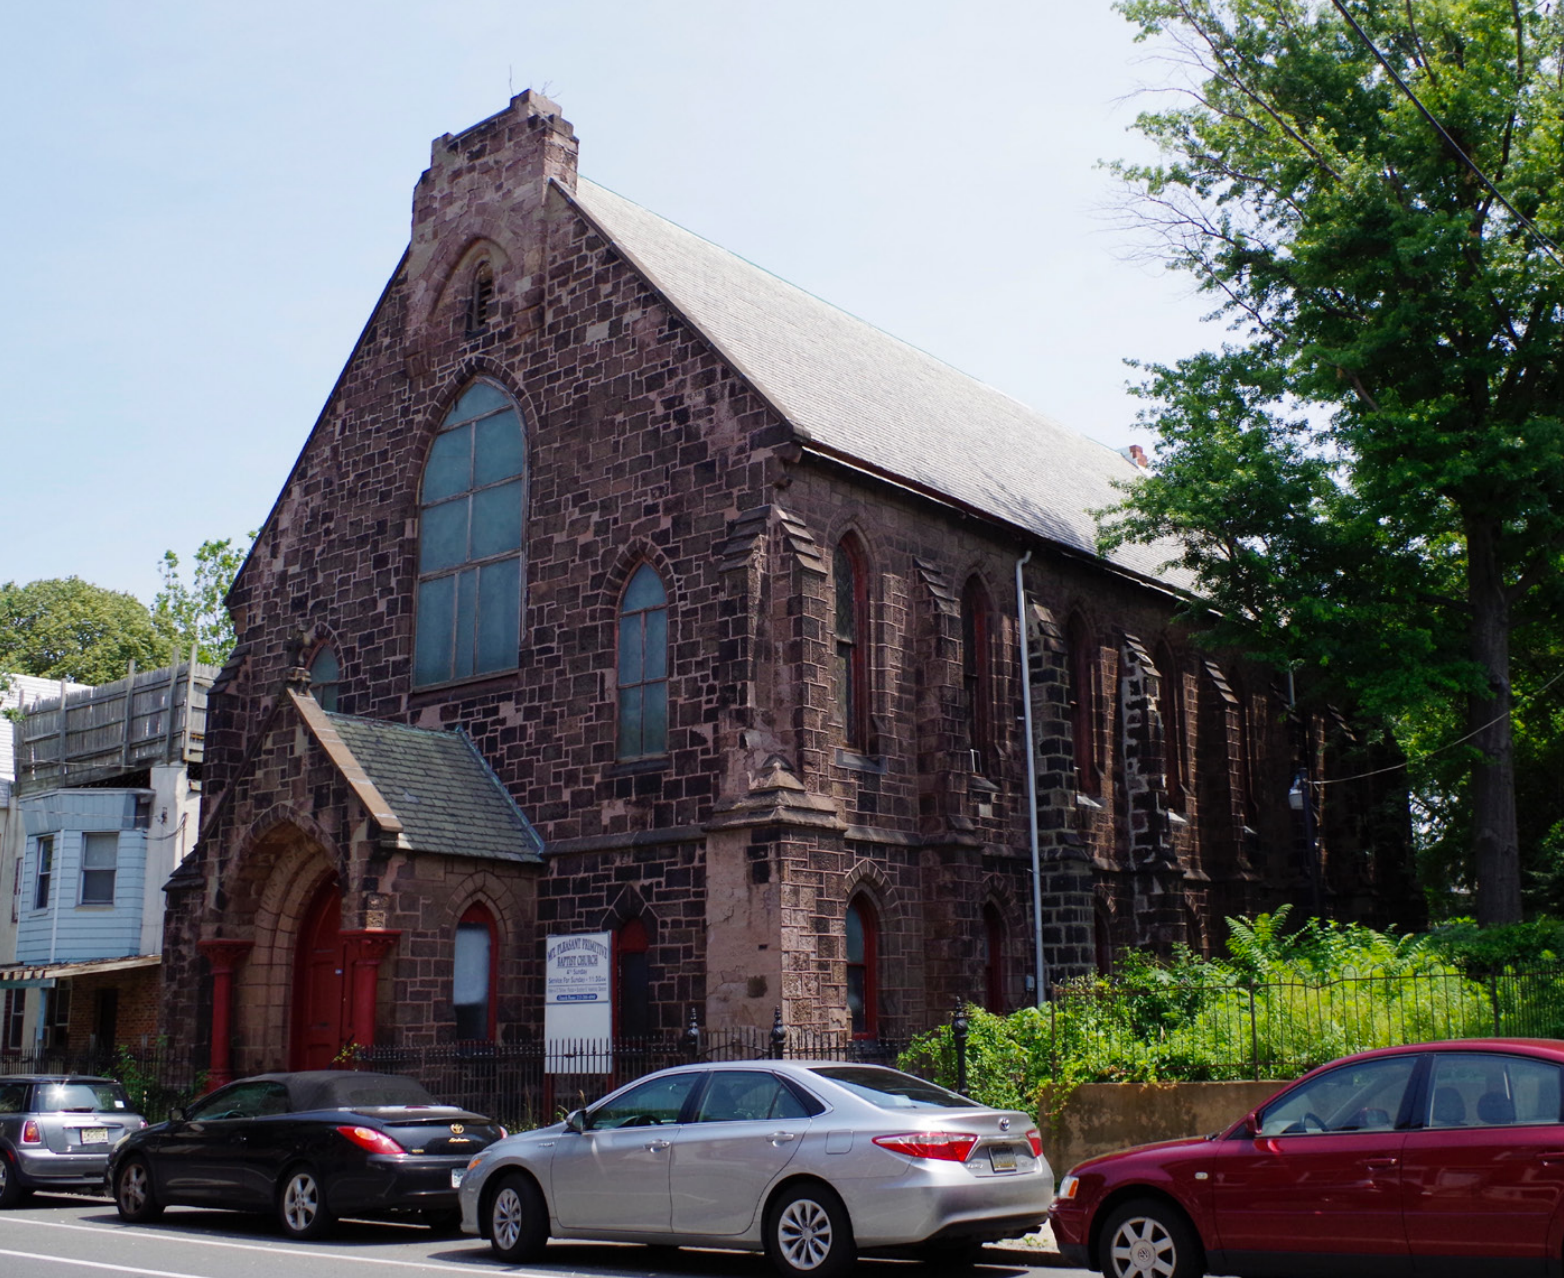  Christ Methodist Episcopal Church / Mt. Pleasant Primitive Baptist | Amy Lambert